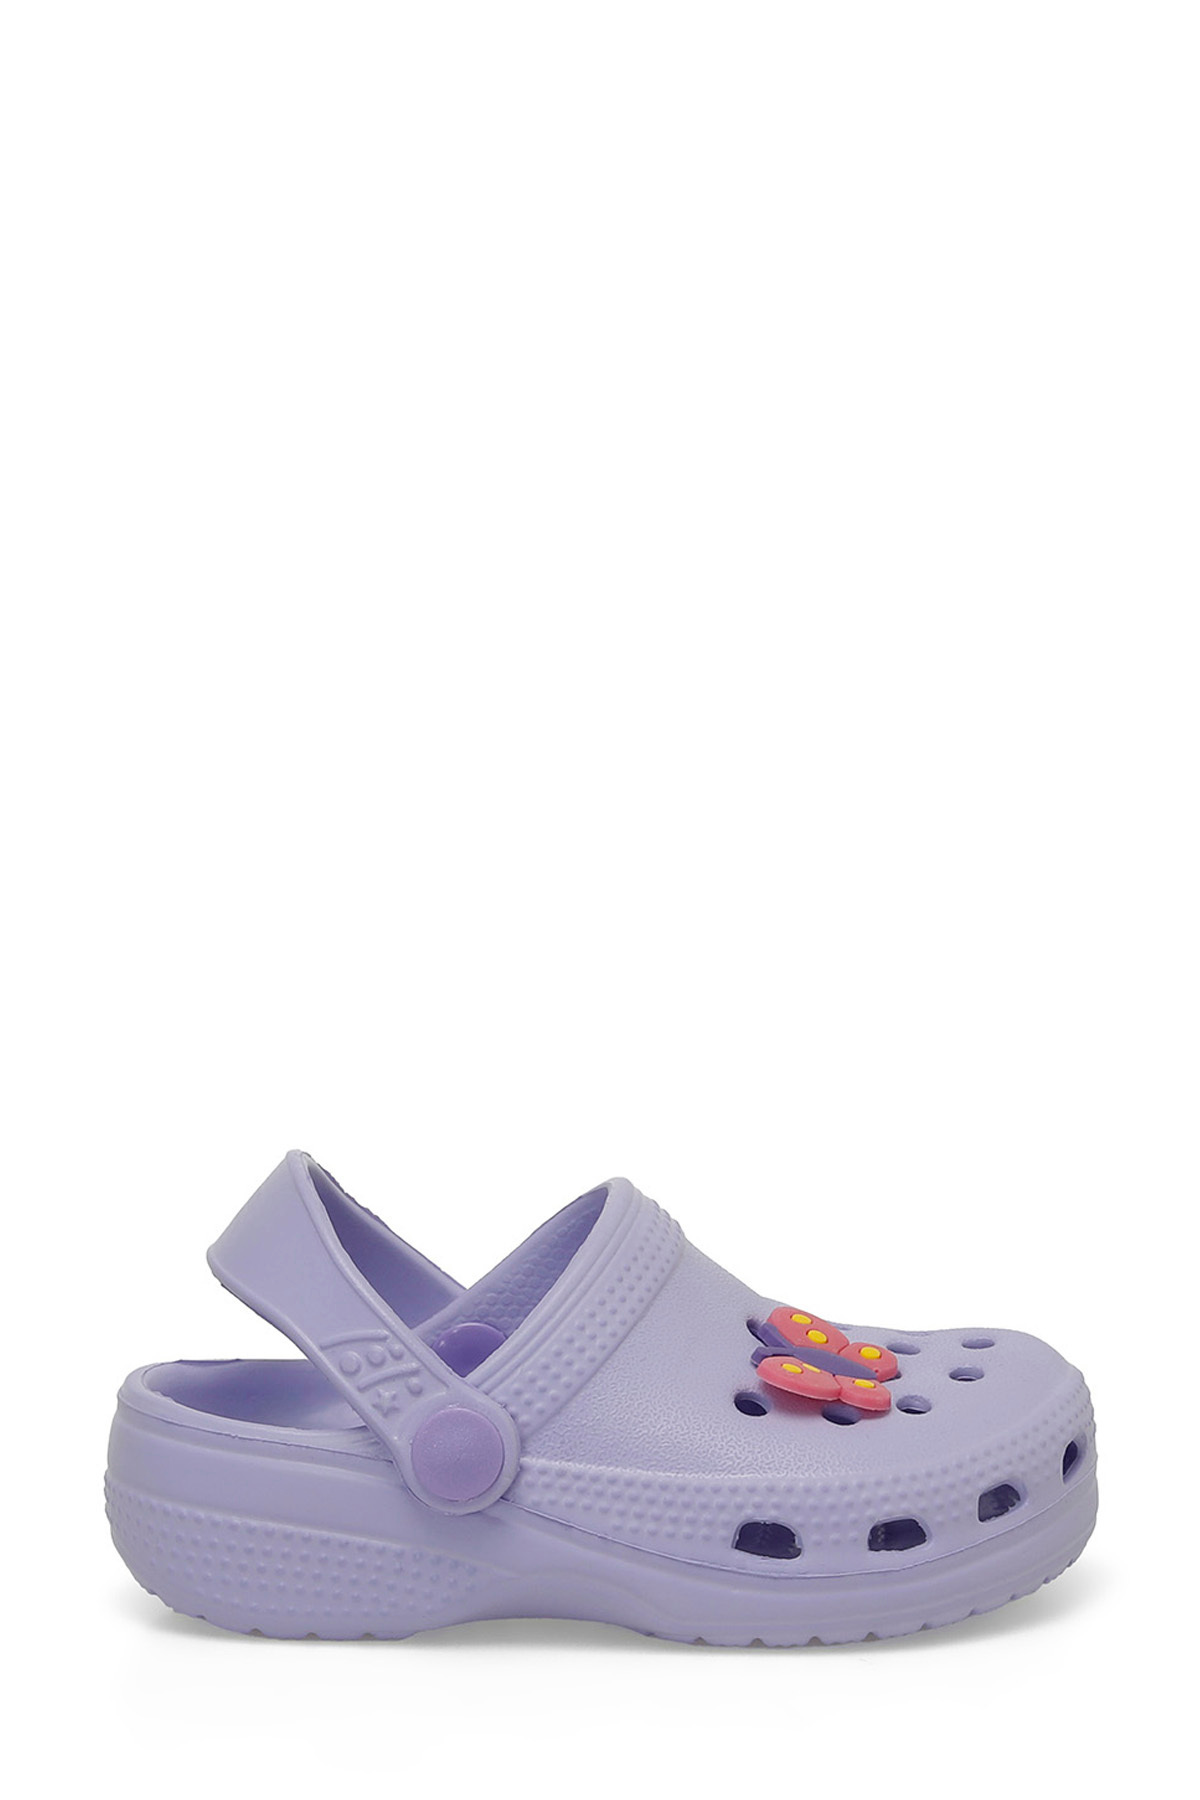 KINETIX FROG 4FX Lilac Girls' Slippers